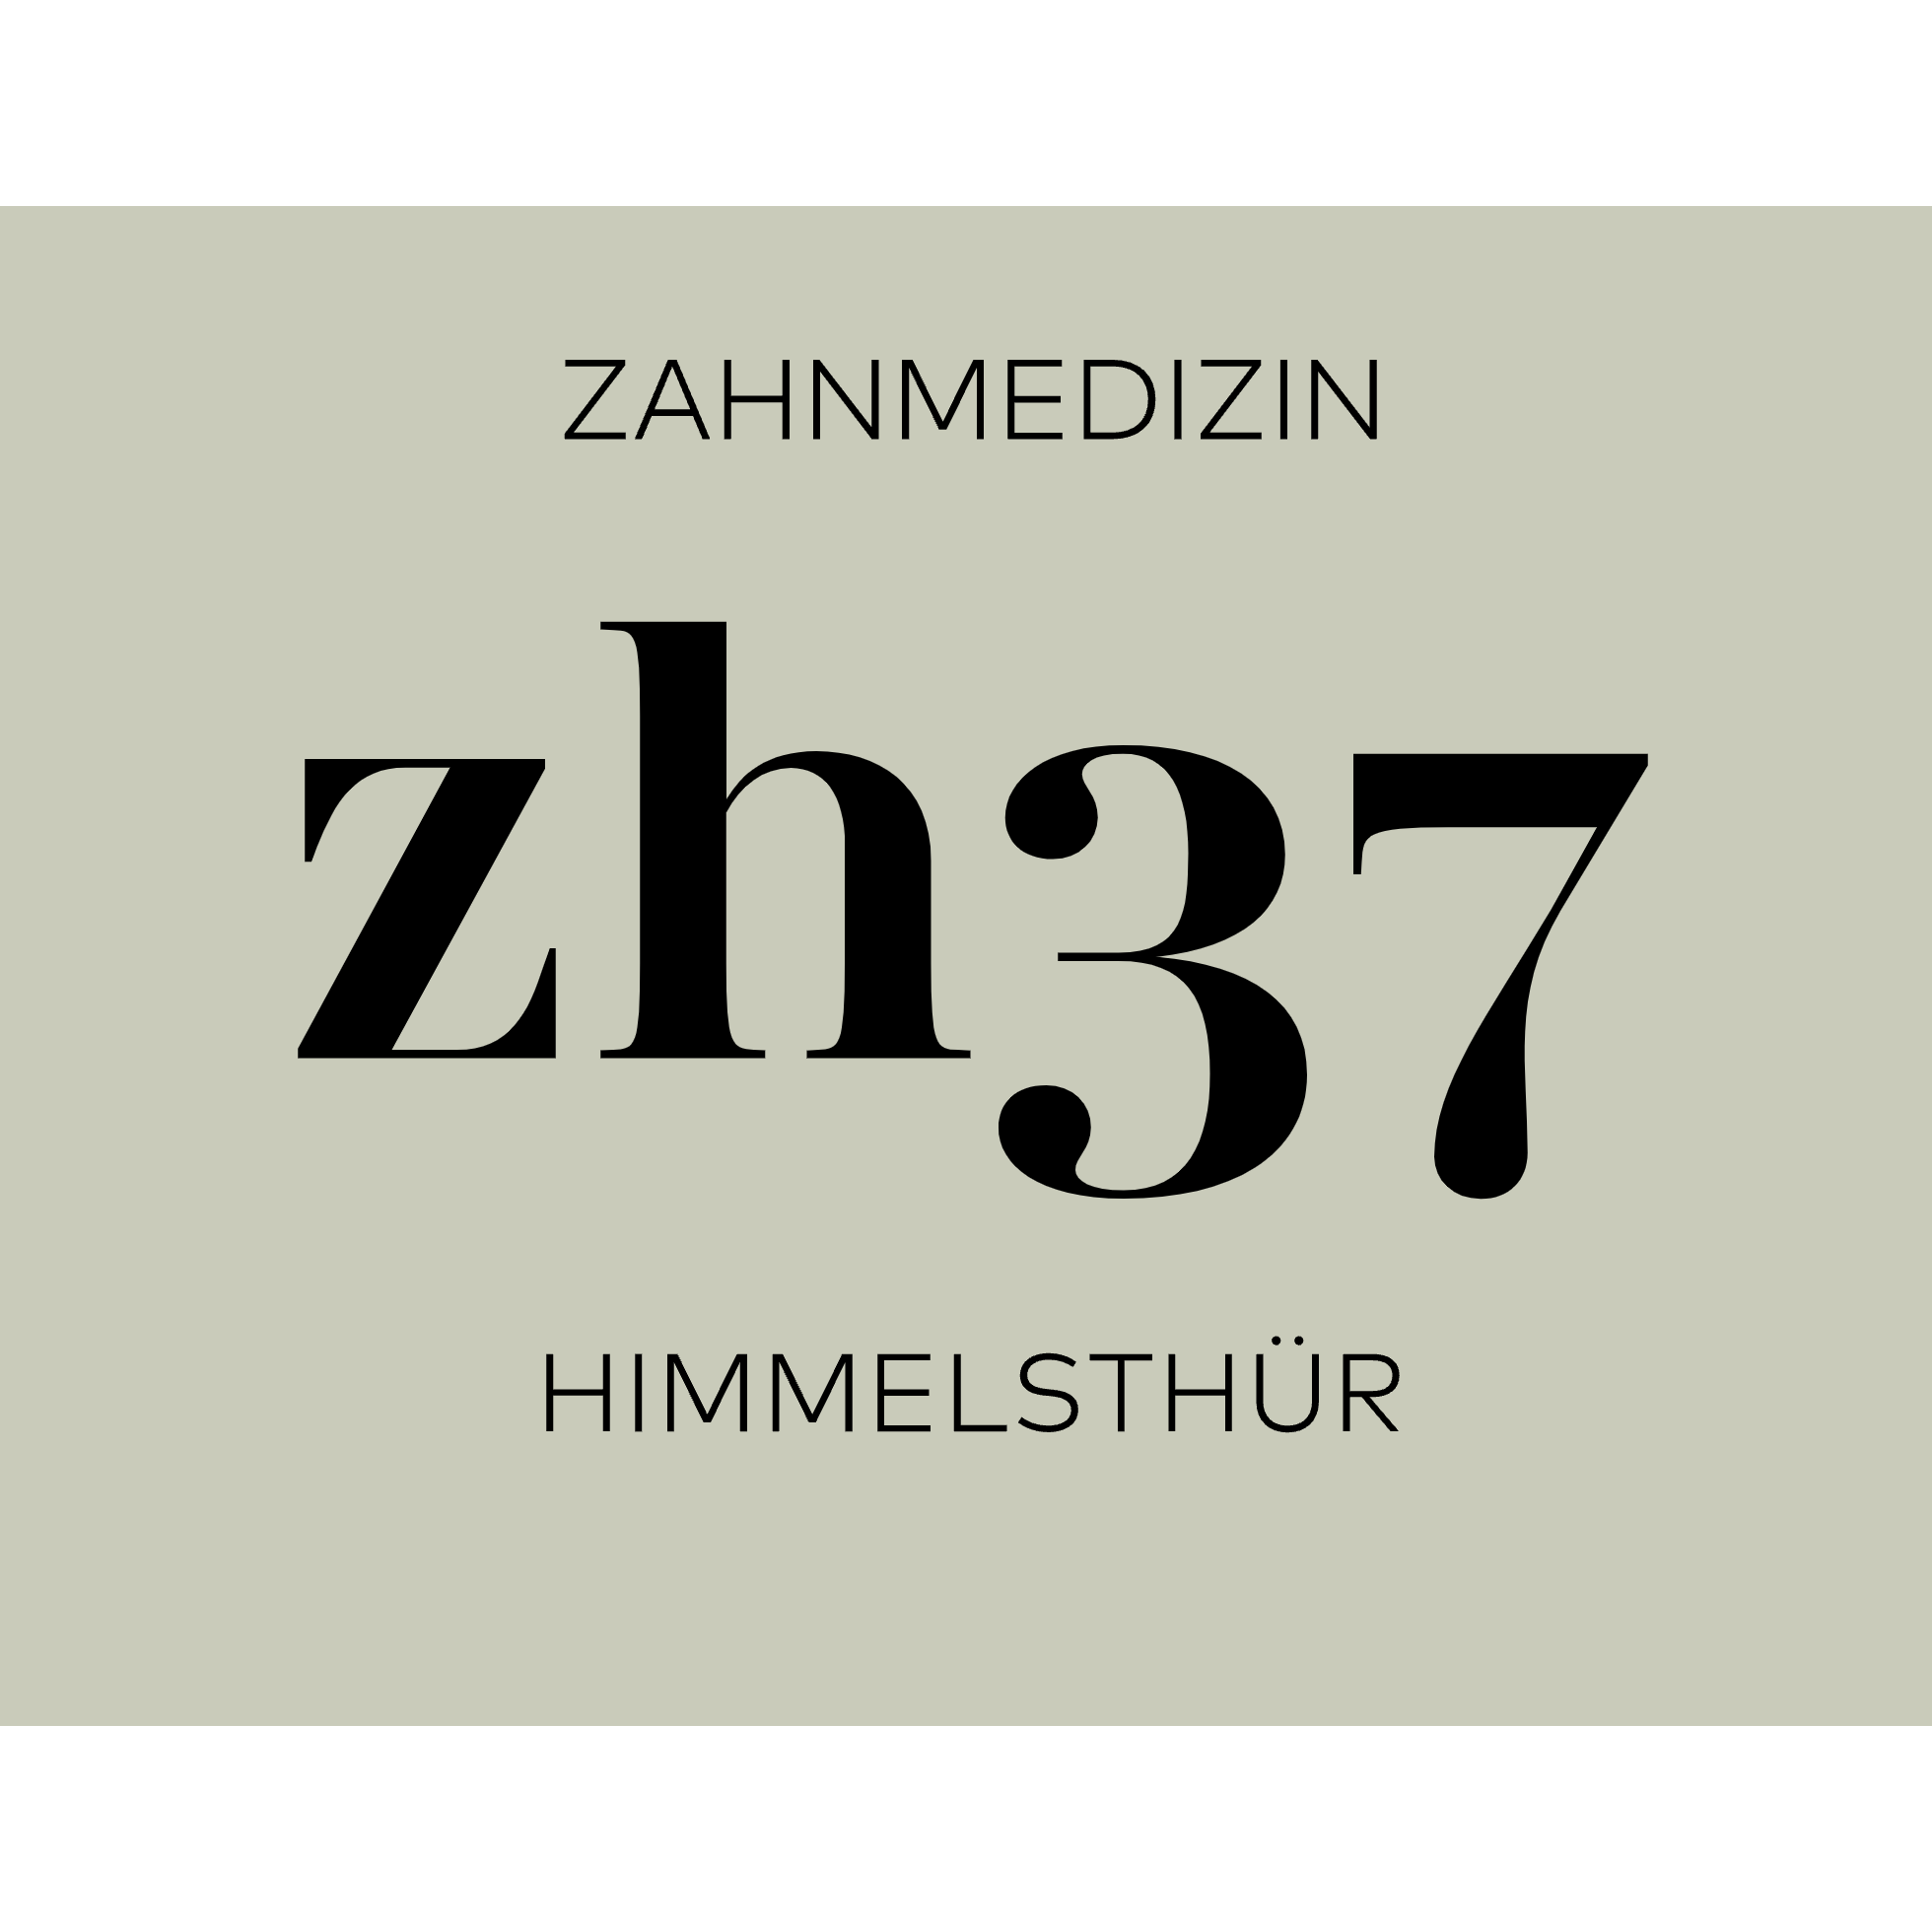 Zahnmedizin Himmelsthür zh37 - Zahnarzt Hildesheim - Logo